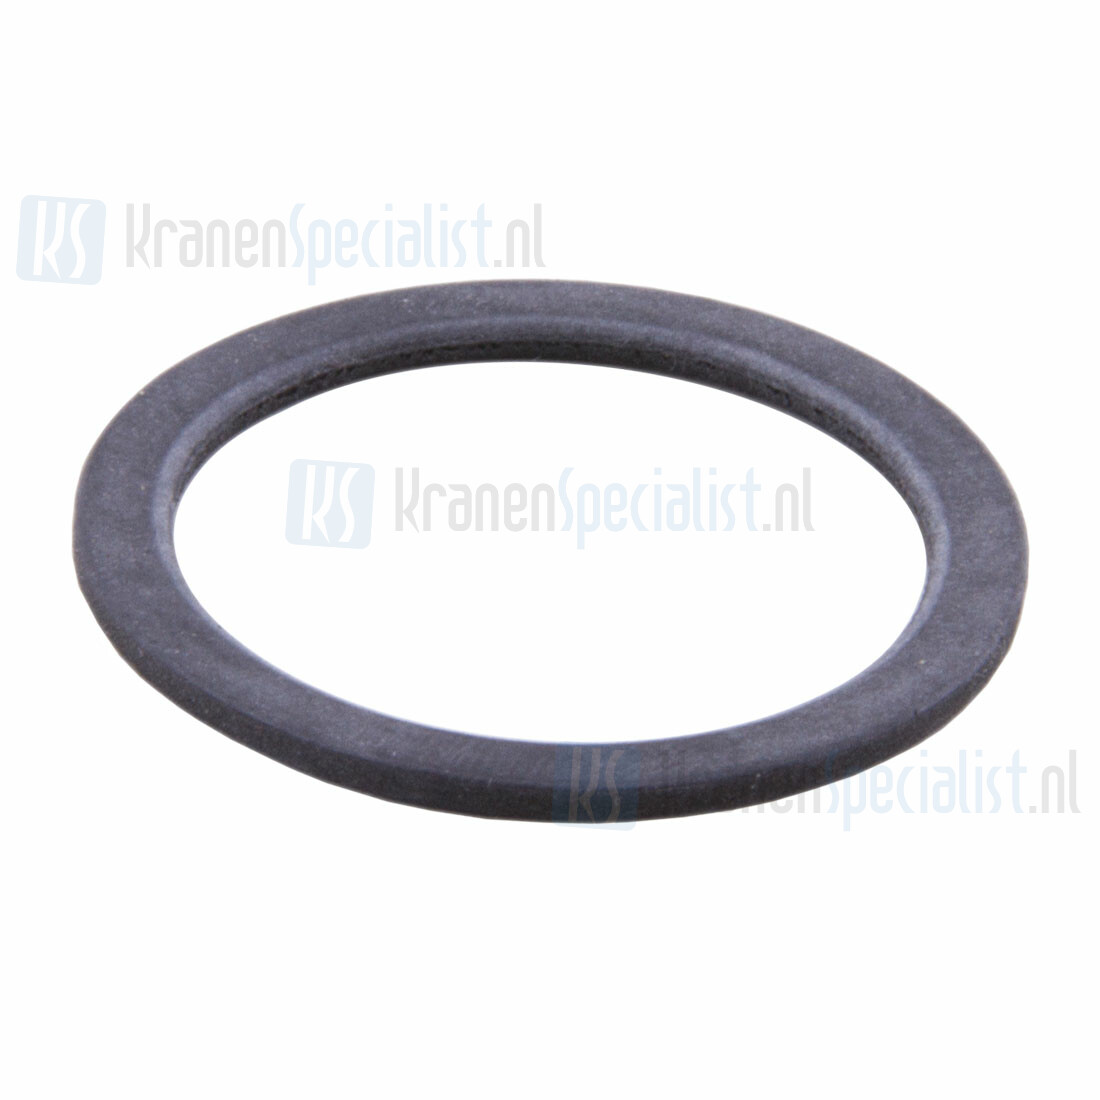 Vervuild Variant beroemd Viega vlakke ring 6/4" voor gootsteen sifon 45mm bu-36mm bi x 2mm zwart  rubber